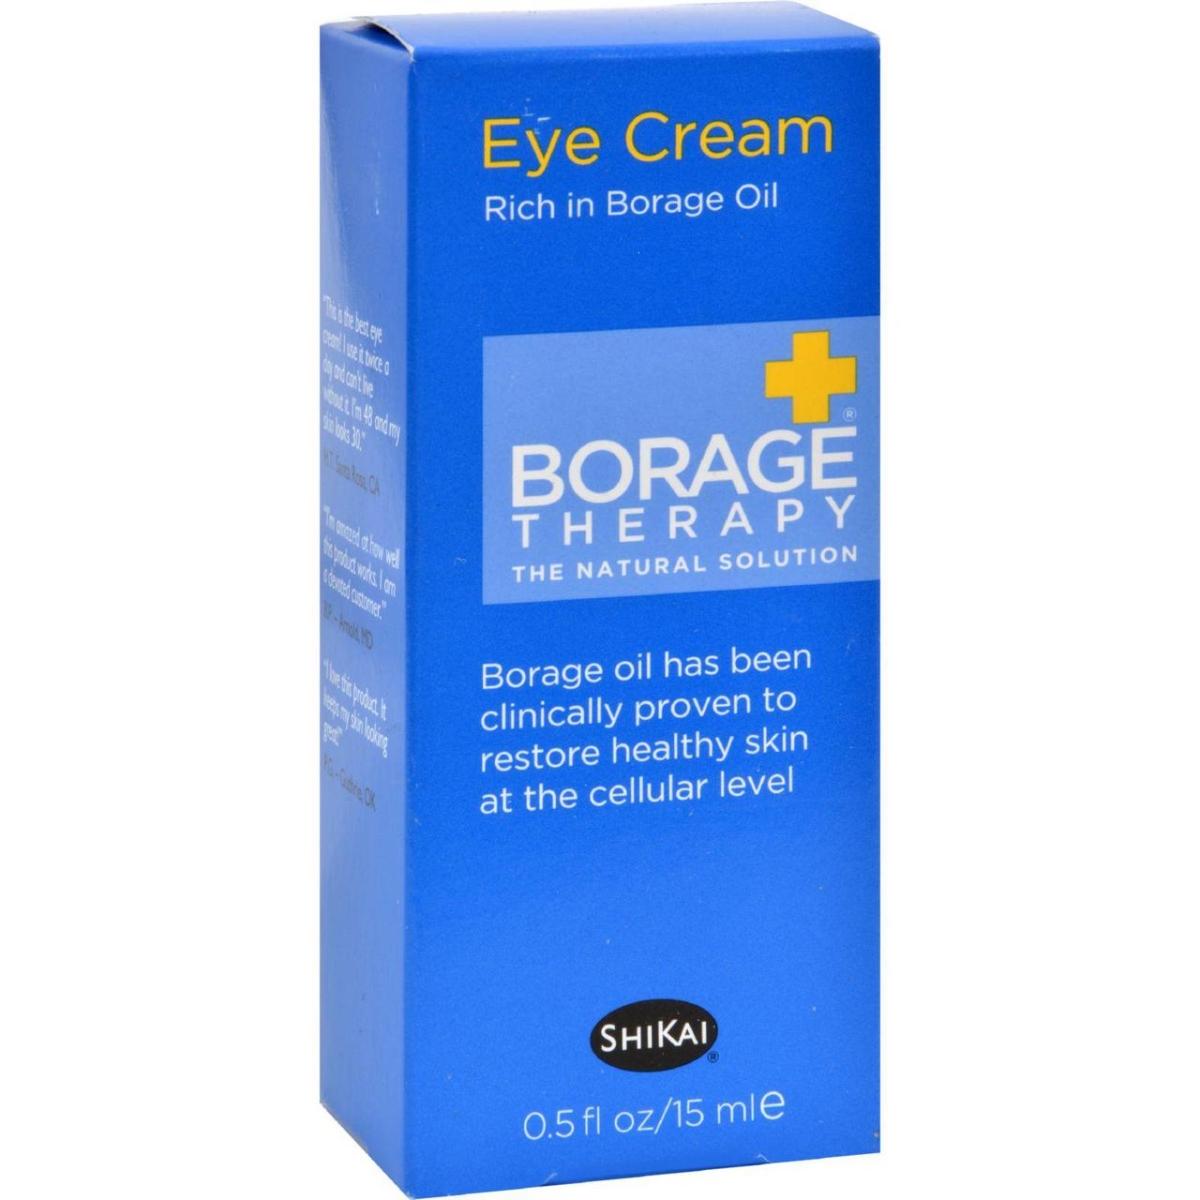 Hg0826719 0.5 Fl Oz Borage Dry Skin Therapy Eye Cream